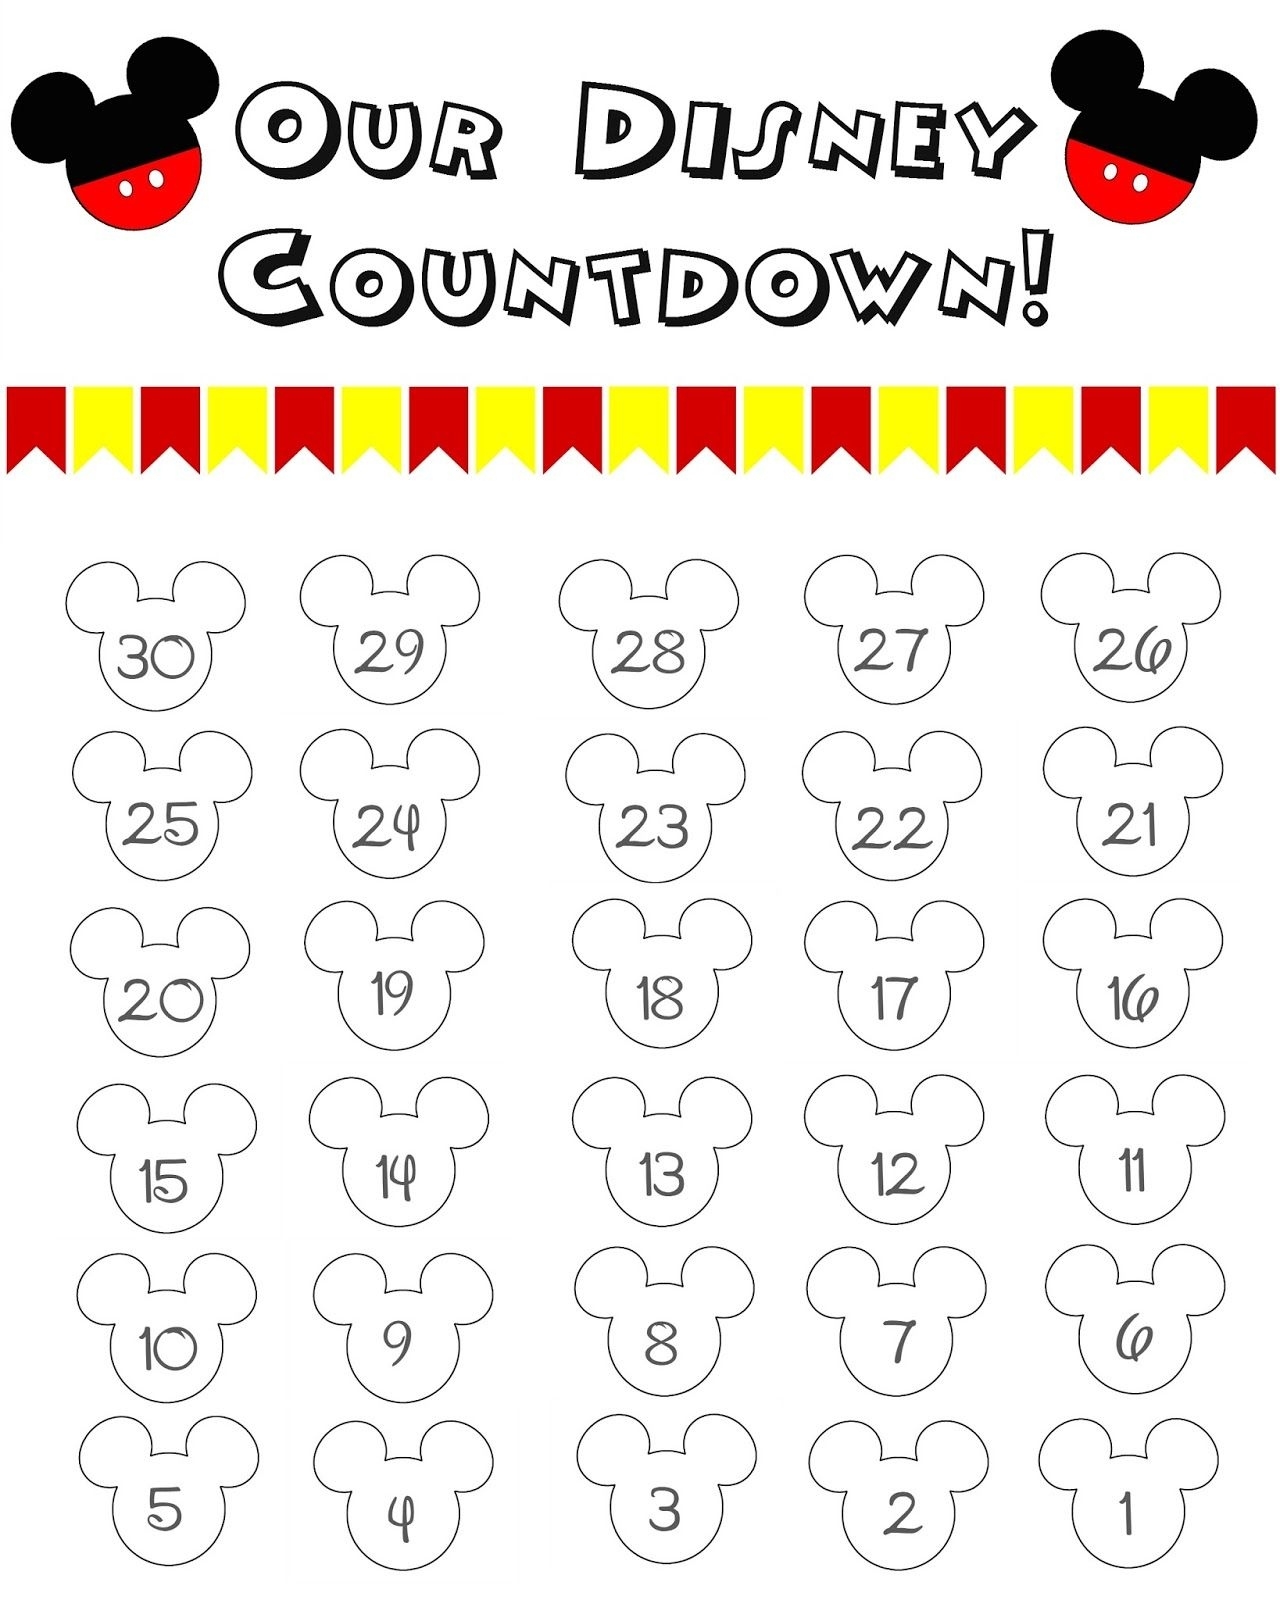 Disney World Countdown Calendar - Free Printable | Disney Dashing Countdown To Disney World Trip